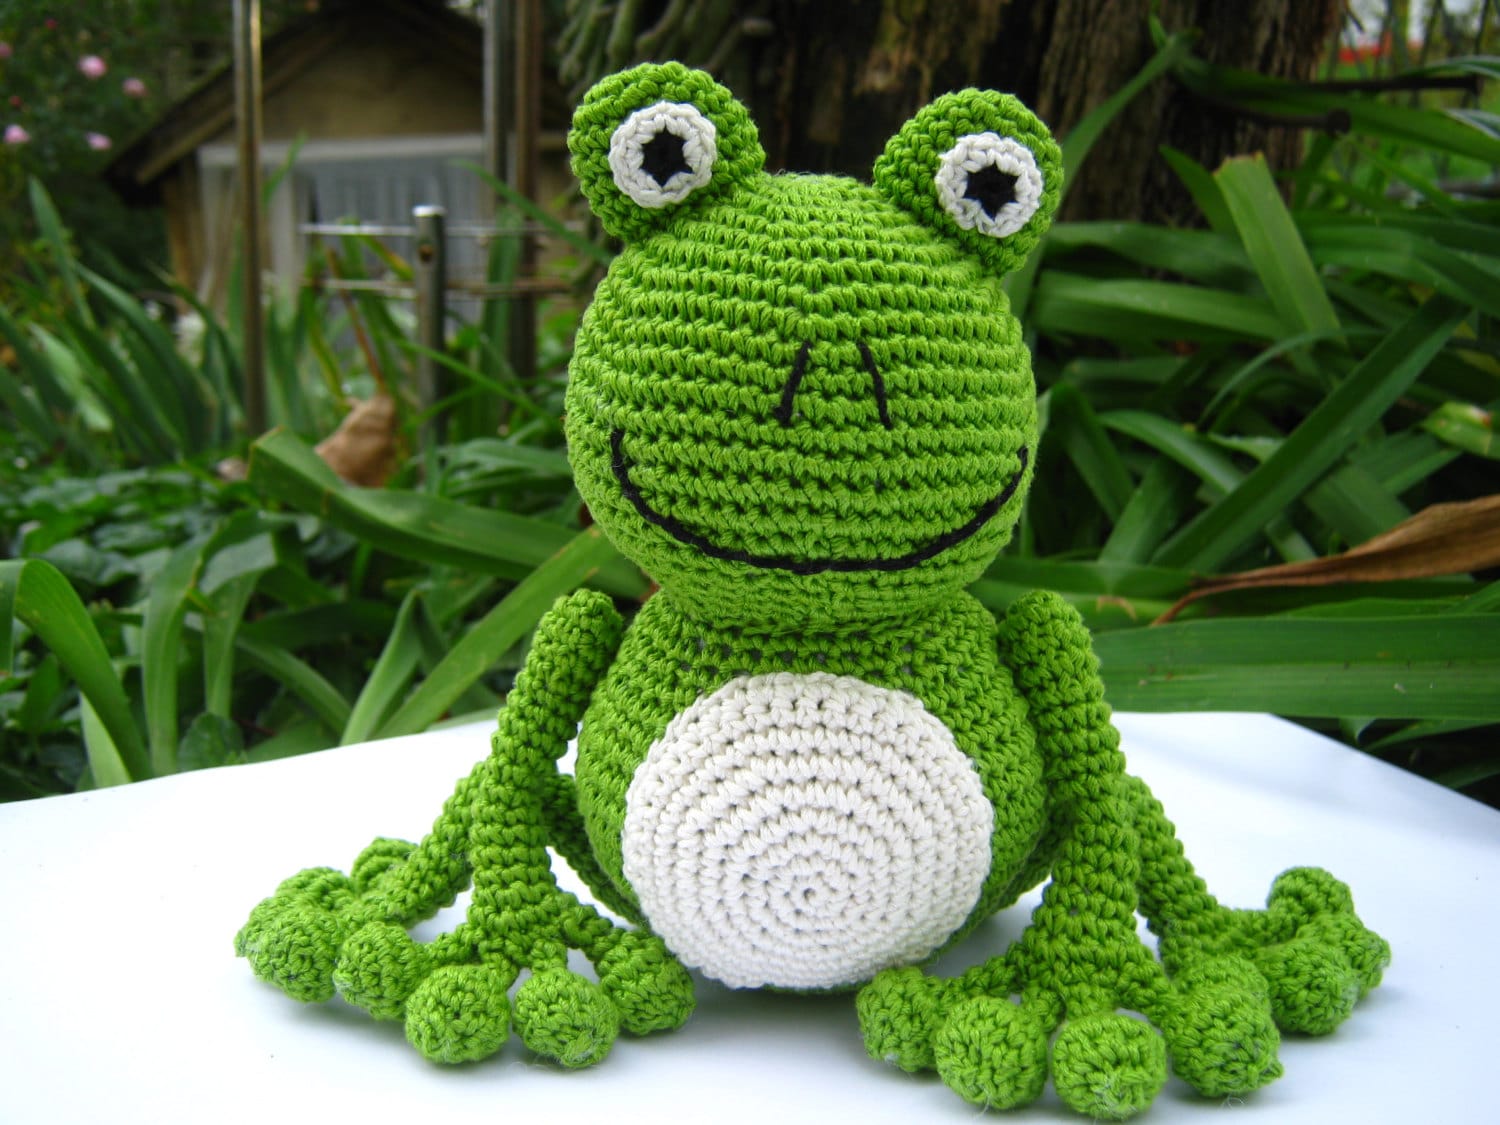 Amigurumi green chrochet frog pattern